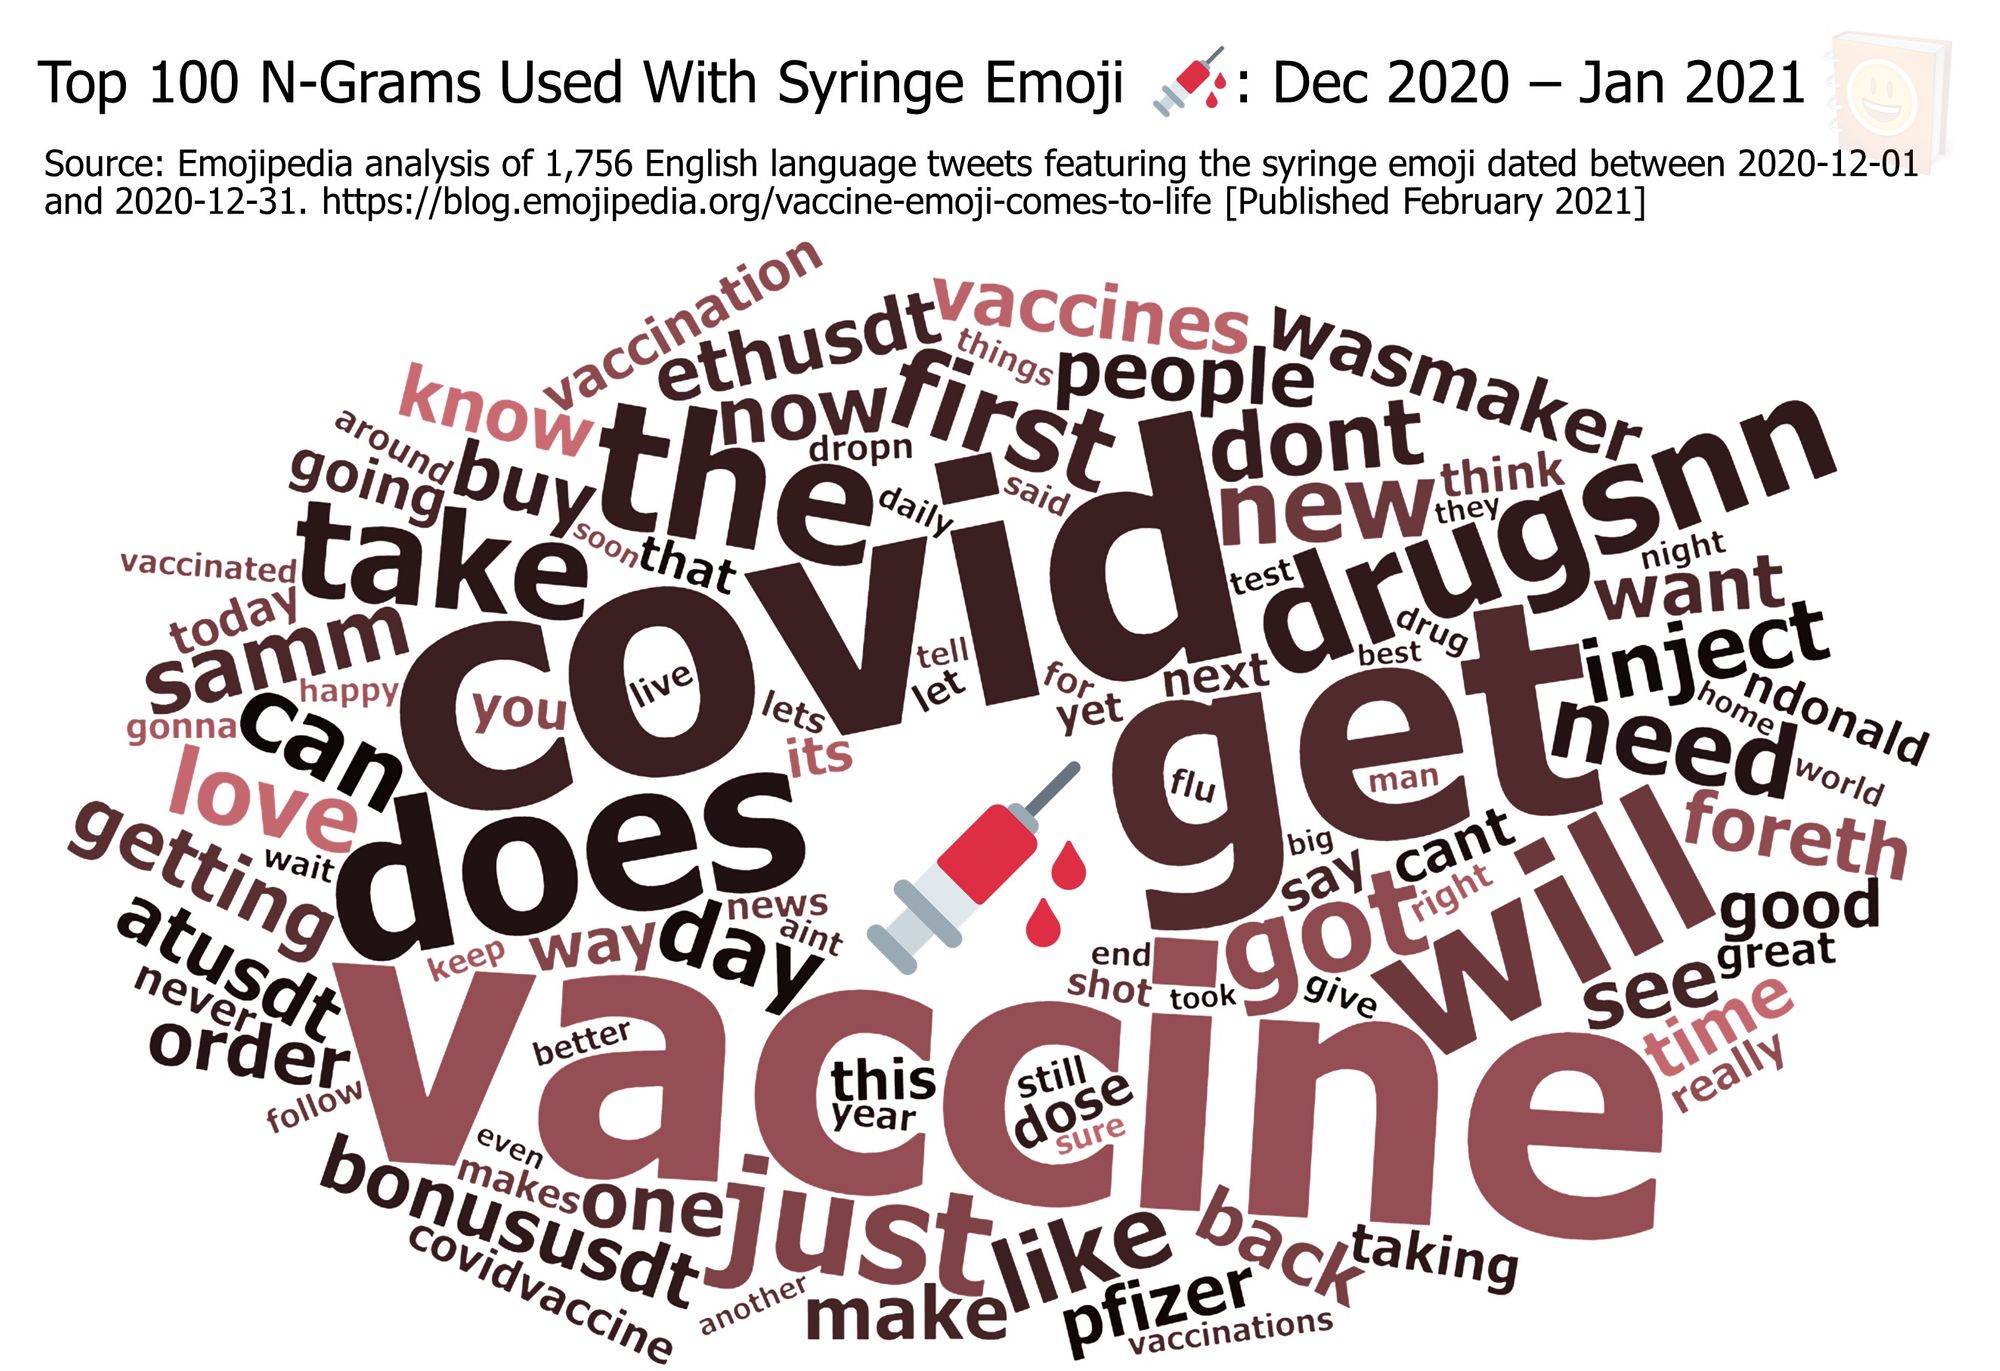 Emojipedia-Syringe-Emoji-Analysis---February-2021---Top-100-N-Grams-Used-With-Syringe-Emoji-Dec-2020---Jan-2021